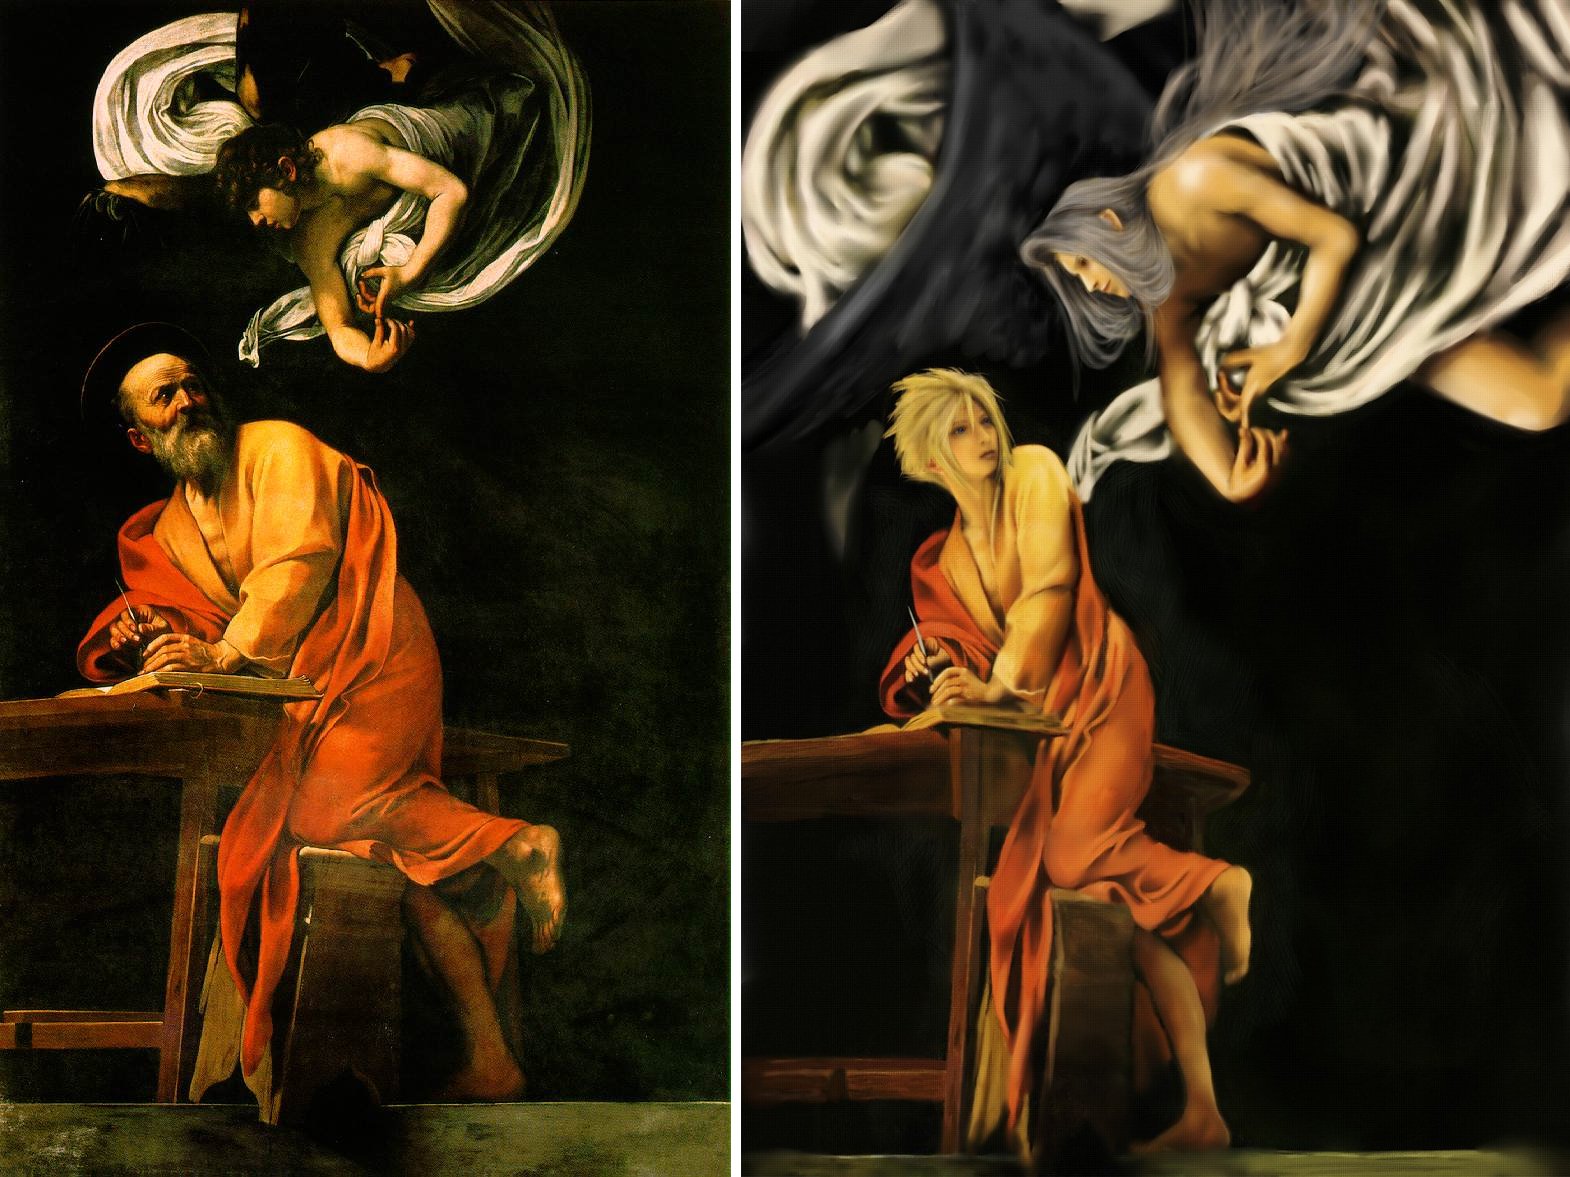 Караваджо святой матфей. К. Паустовский "Караваджо". Caravaggio the inspiration of Saint Matthew.